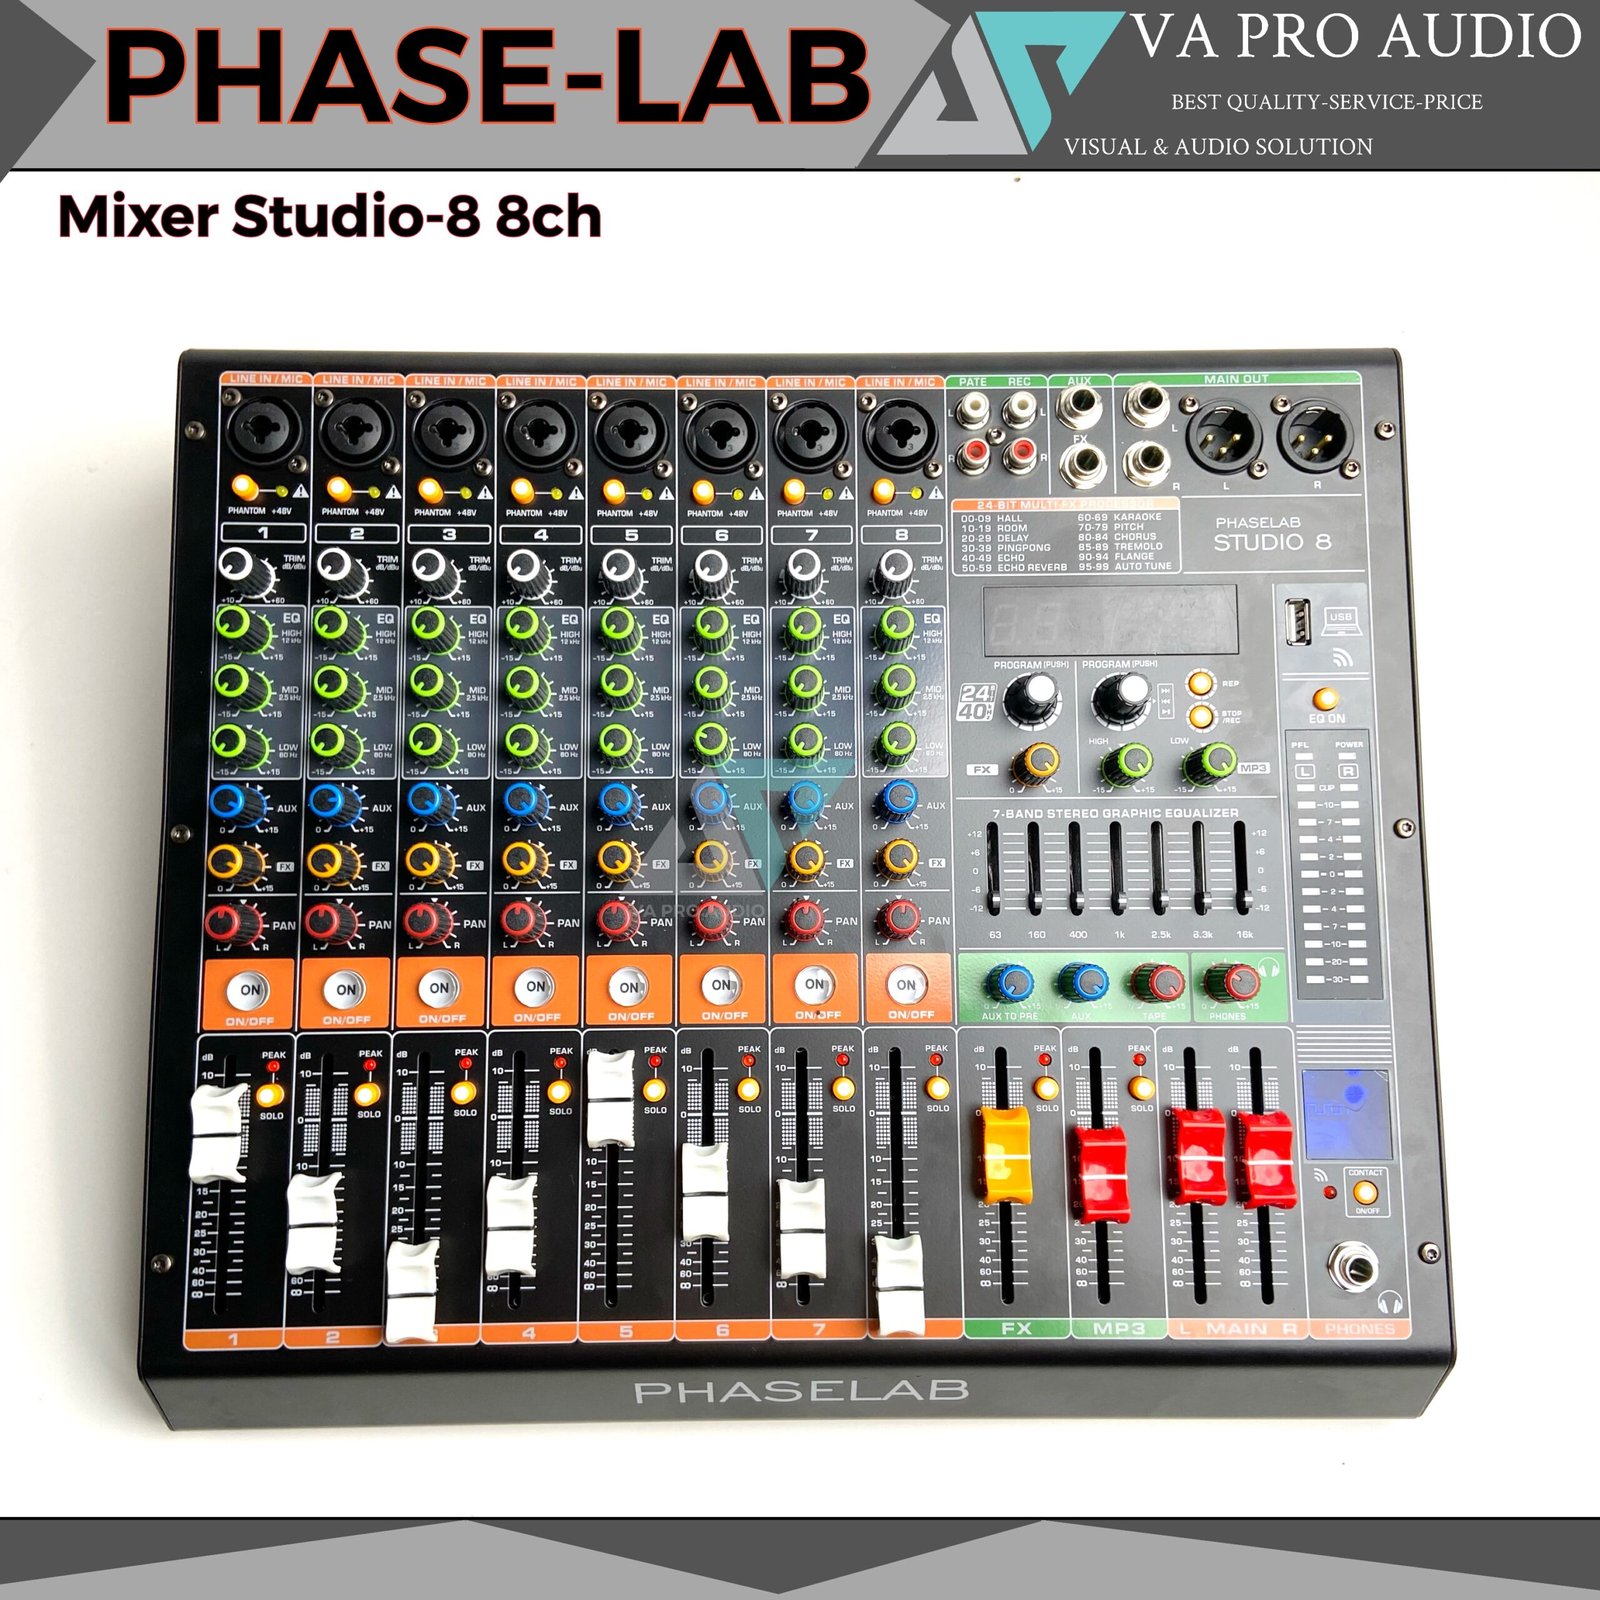 Mixer audio phaselab studio 8 ch - VA PRO AUDIO